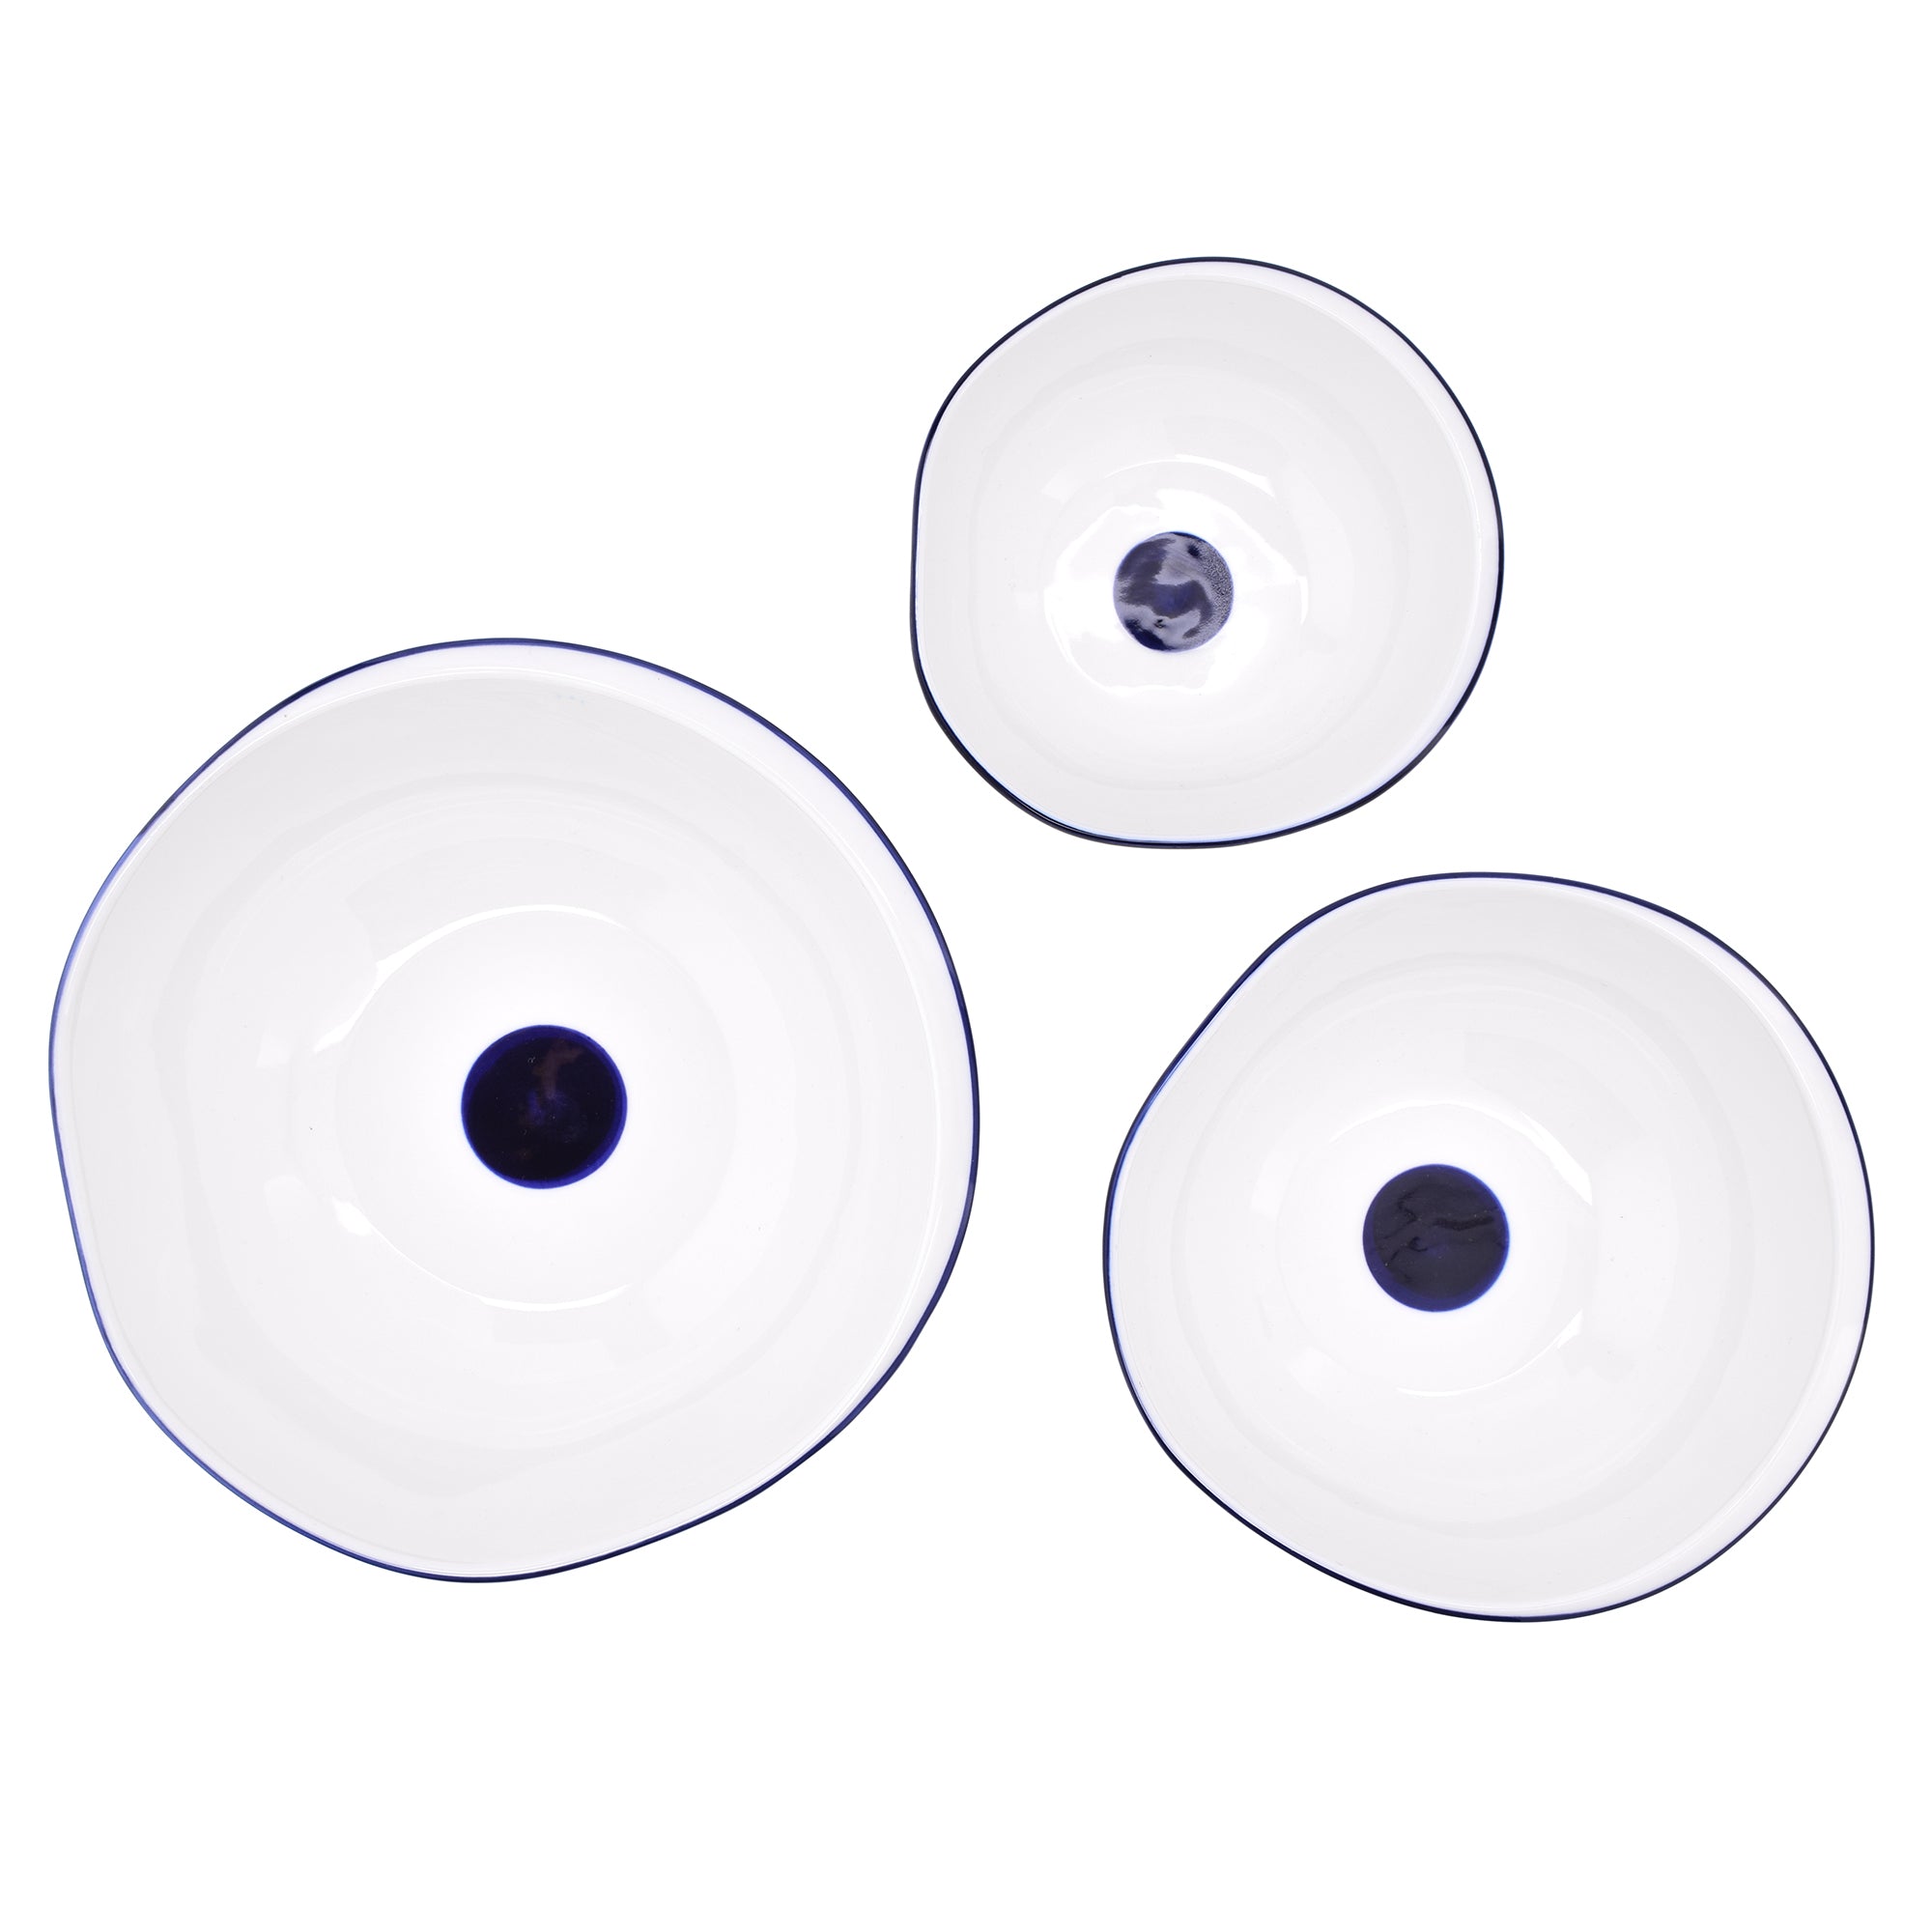 22-OZ White Porcelain Bowl with Blue Accent - Set of Six